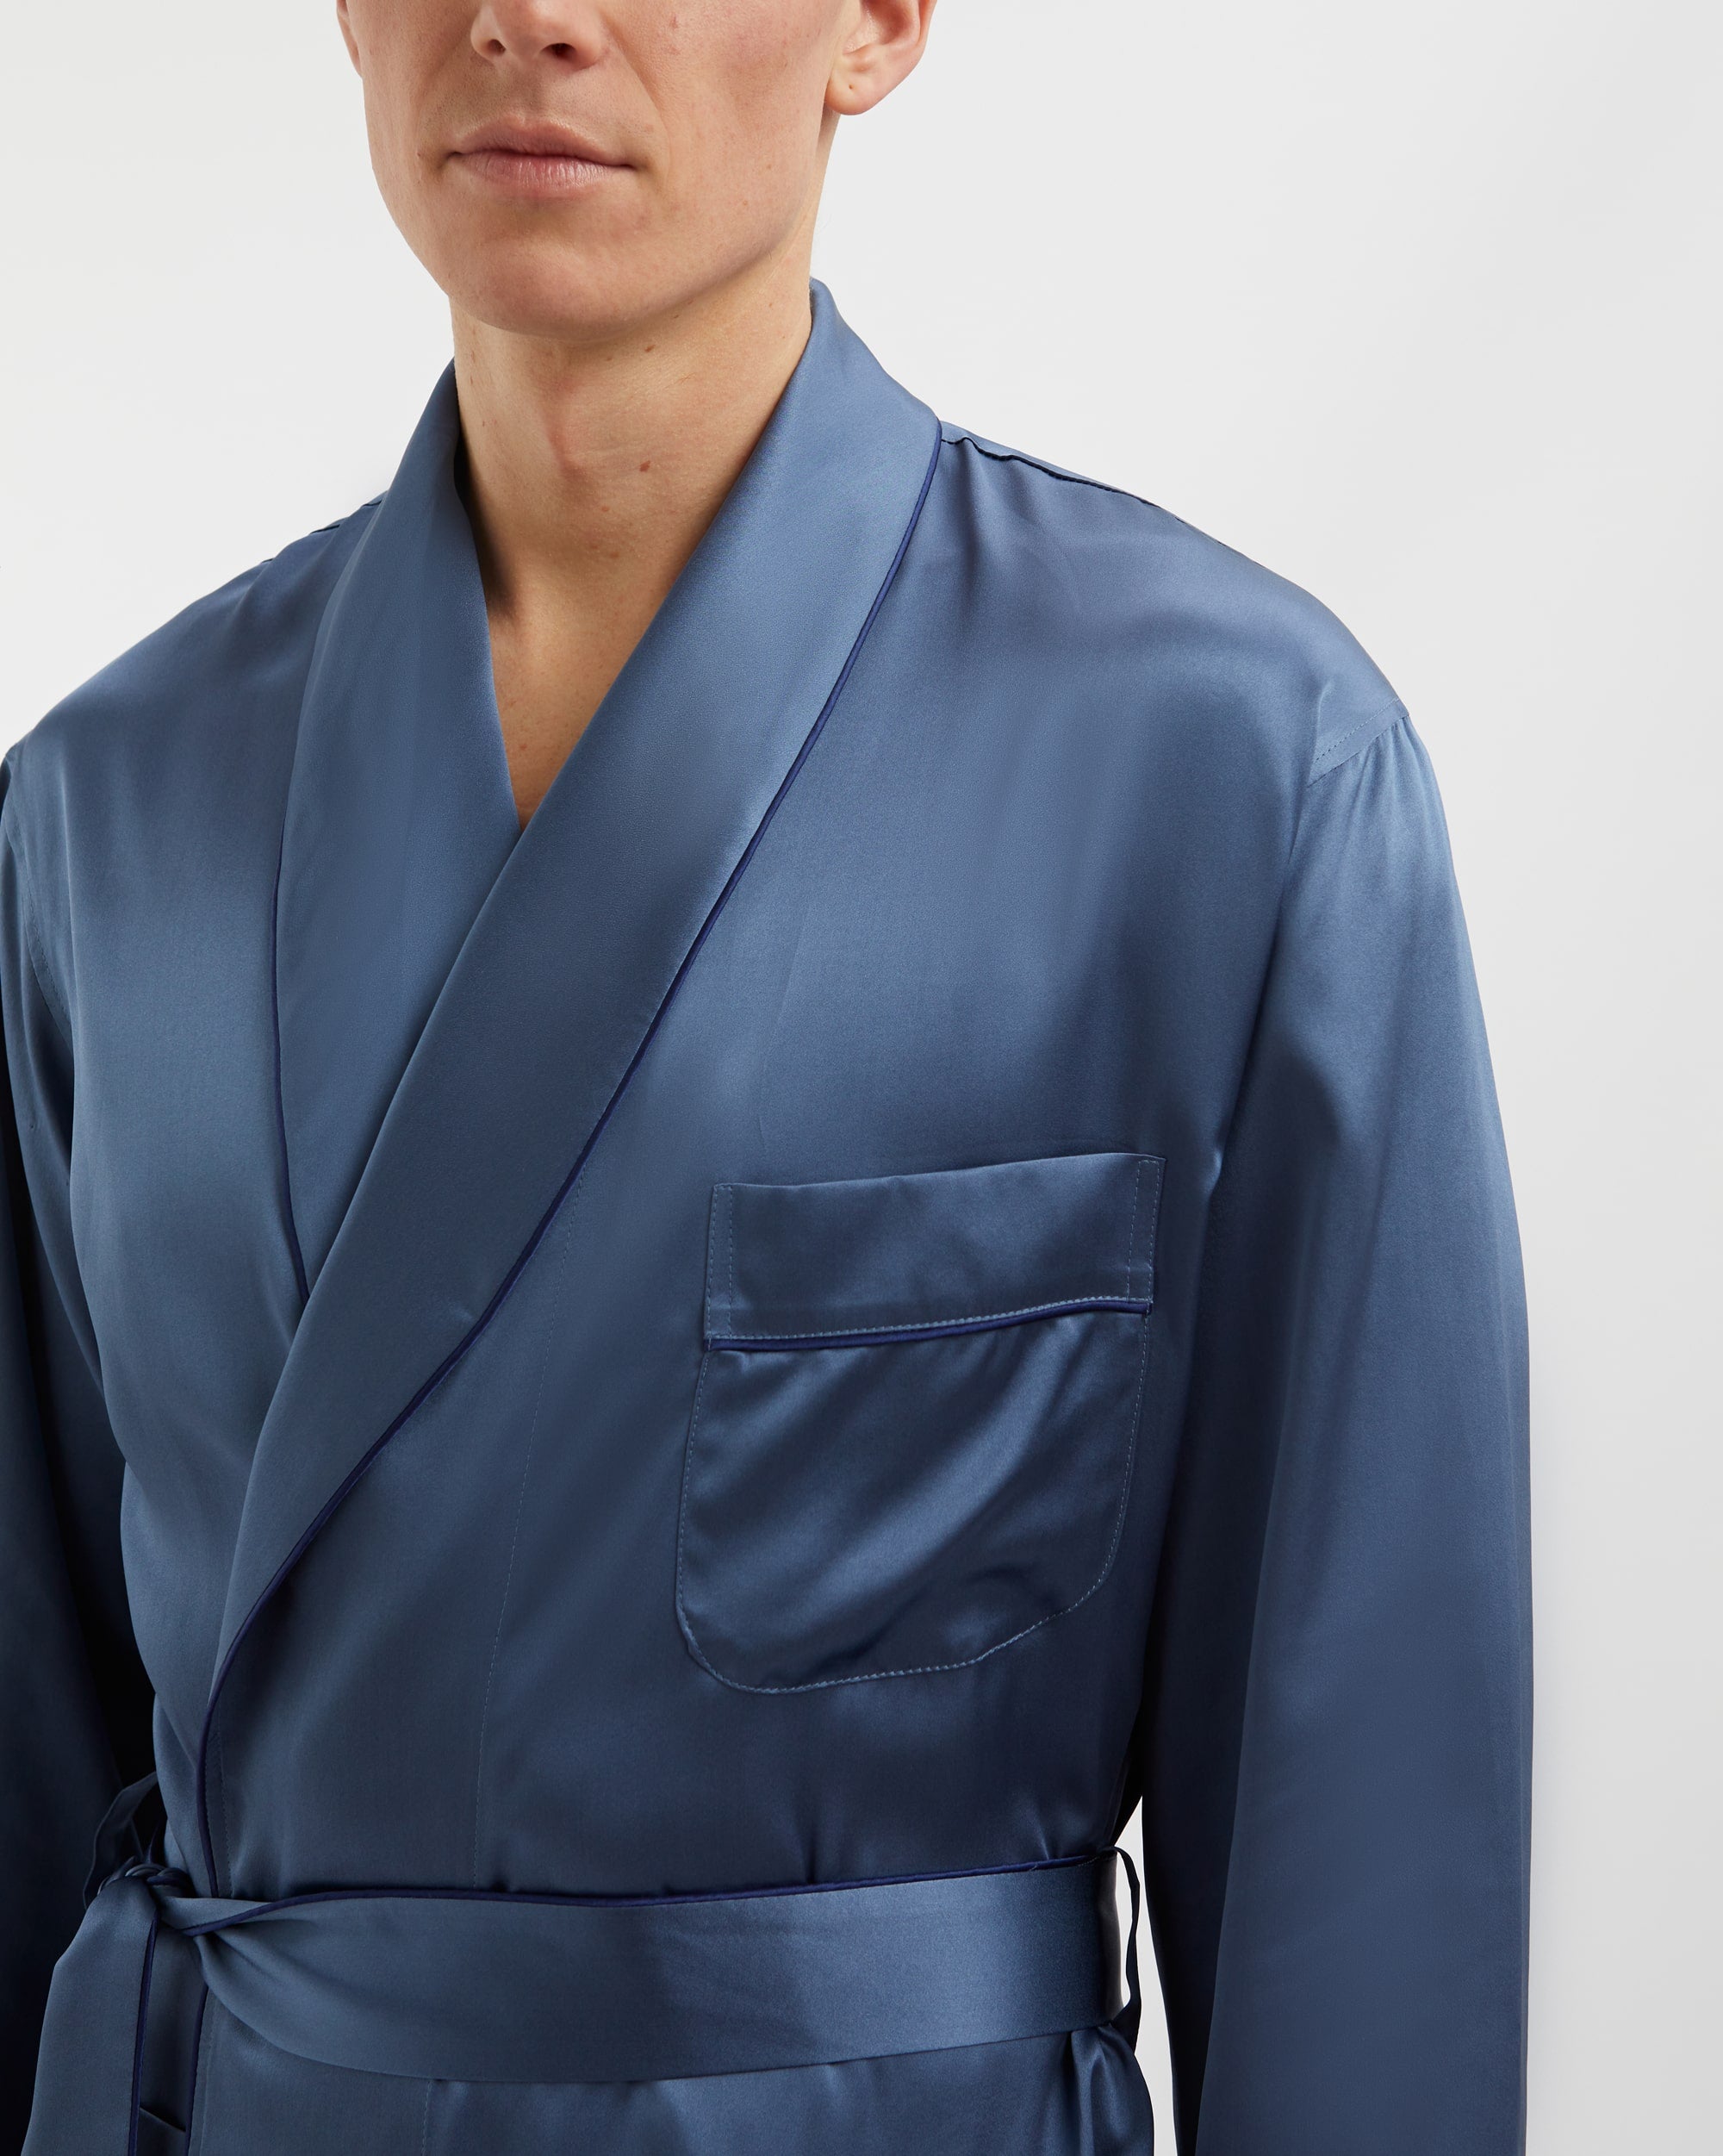 Men's Silk Satin Nightgown Stripe Sleepwear Pyjamas Long Sleeve Loose Silk  Dressing Gown Nightwear with Sash Belt Bathrobe Robe Blue L-XXL,Dark blue  stripes,XL : Amazon.co.uk: Fashion